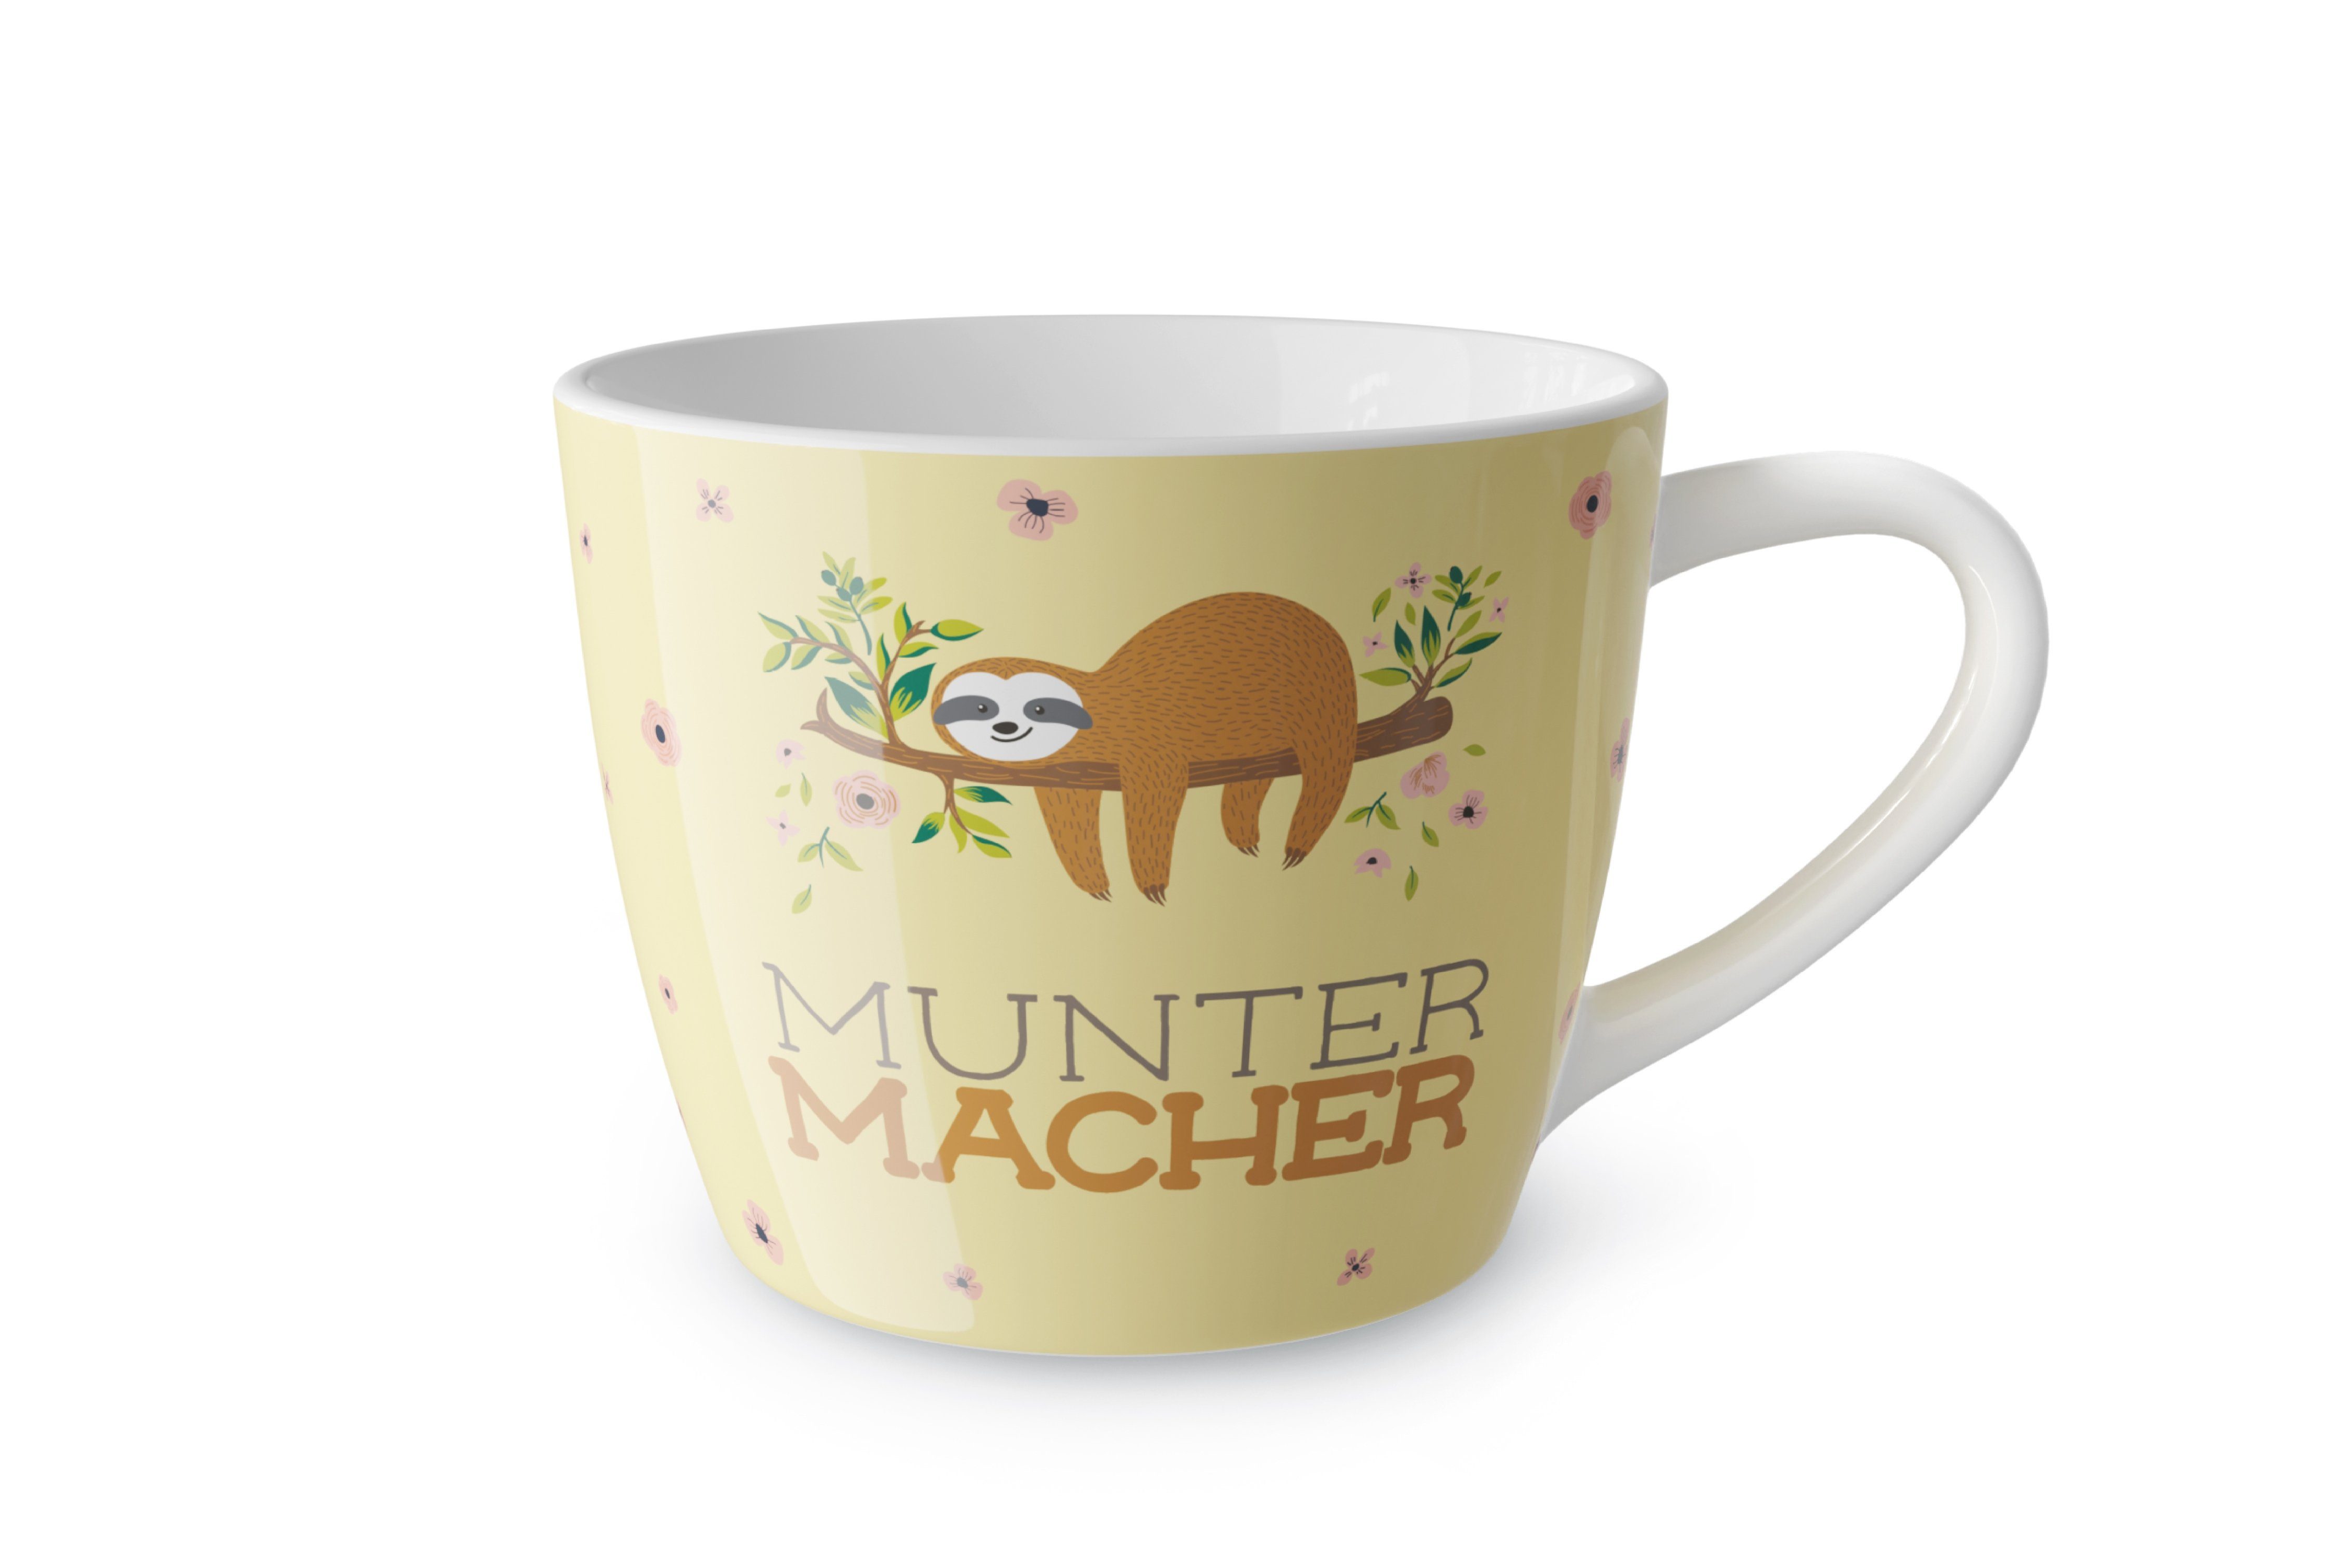 dich Tasse La Vida Material: Tasse Teetasse für Becher Maxi vida, Porzellan Kaffeetasse la